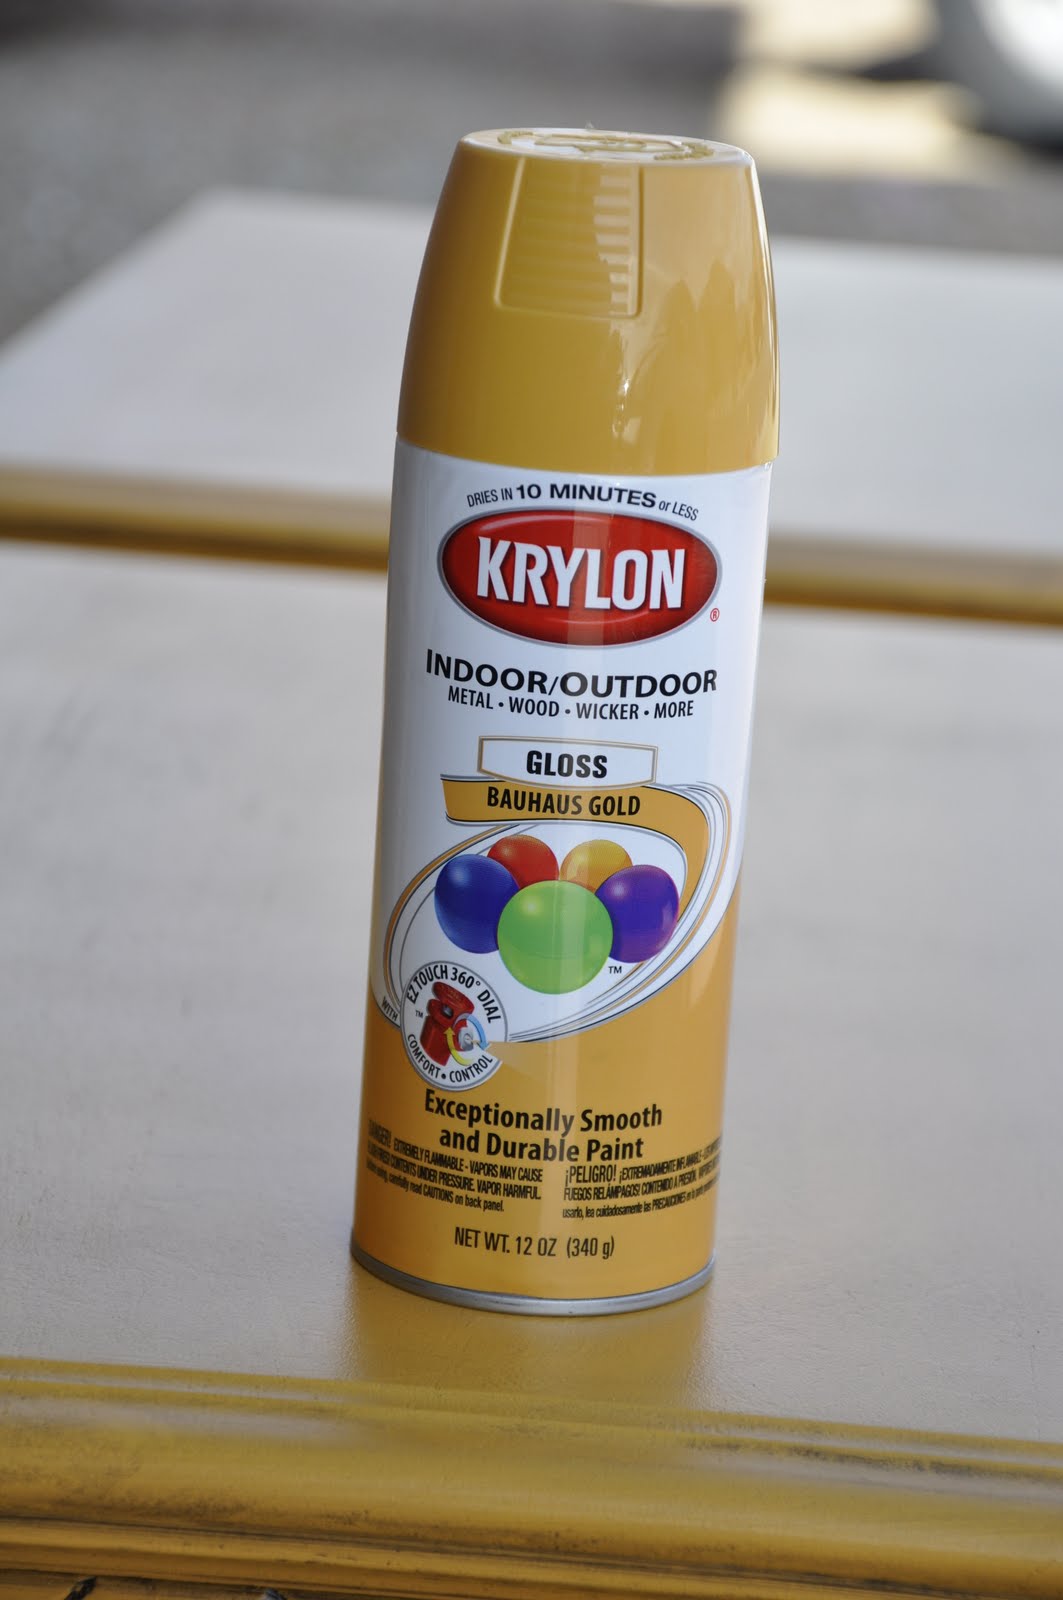 Krylon Matte Faux Snow White Spray Paint (NET WT. 12-oz) in the